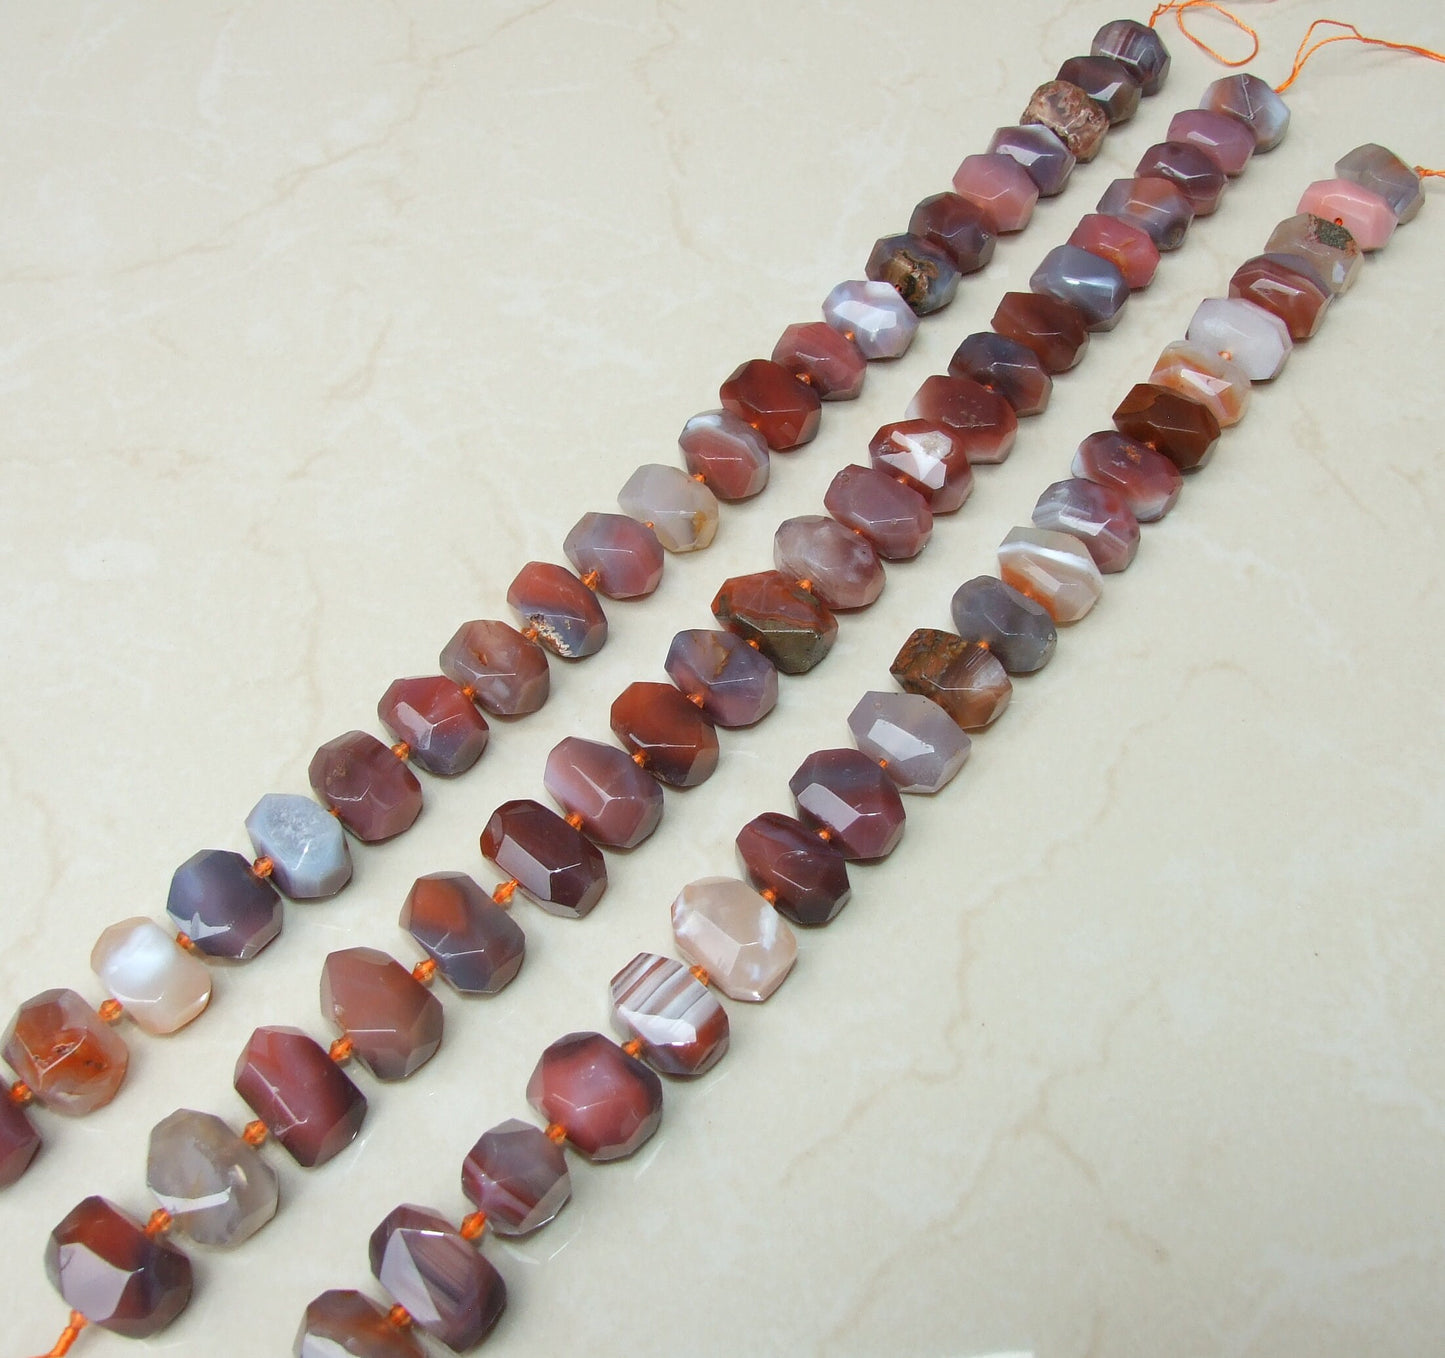 Carnelian Faceted Nugget, Gemstone Pendant, Gemstone Beads, Jewelry Stones, Carnelian Beads, Half Strand - 10mm x 19mm x 23mm